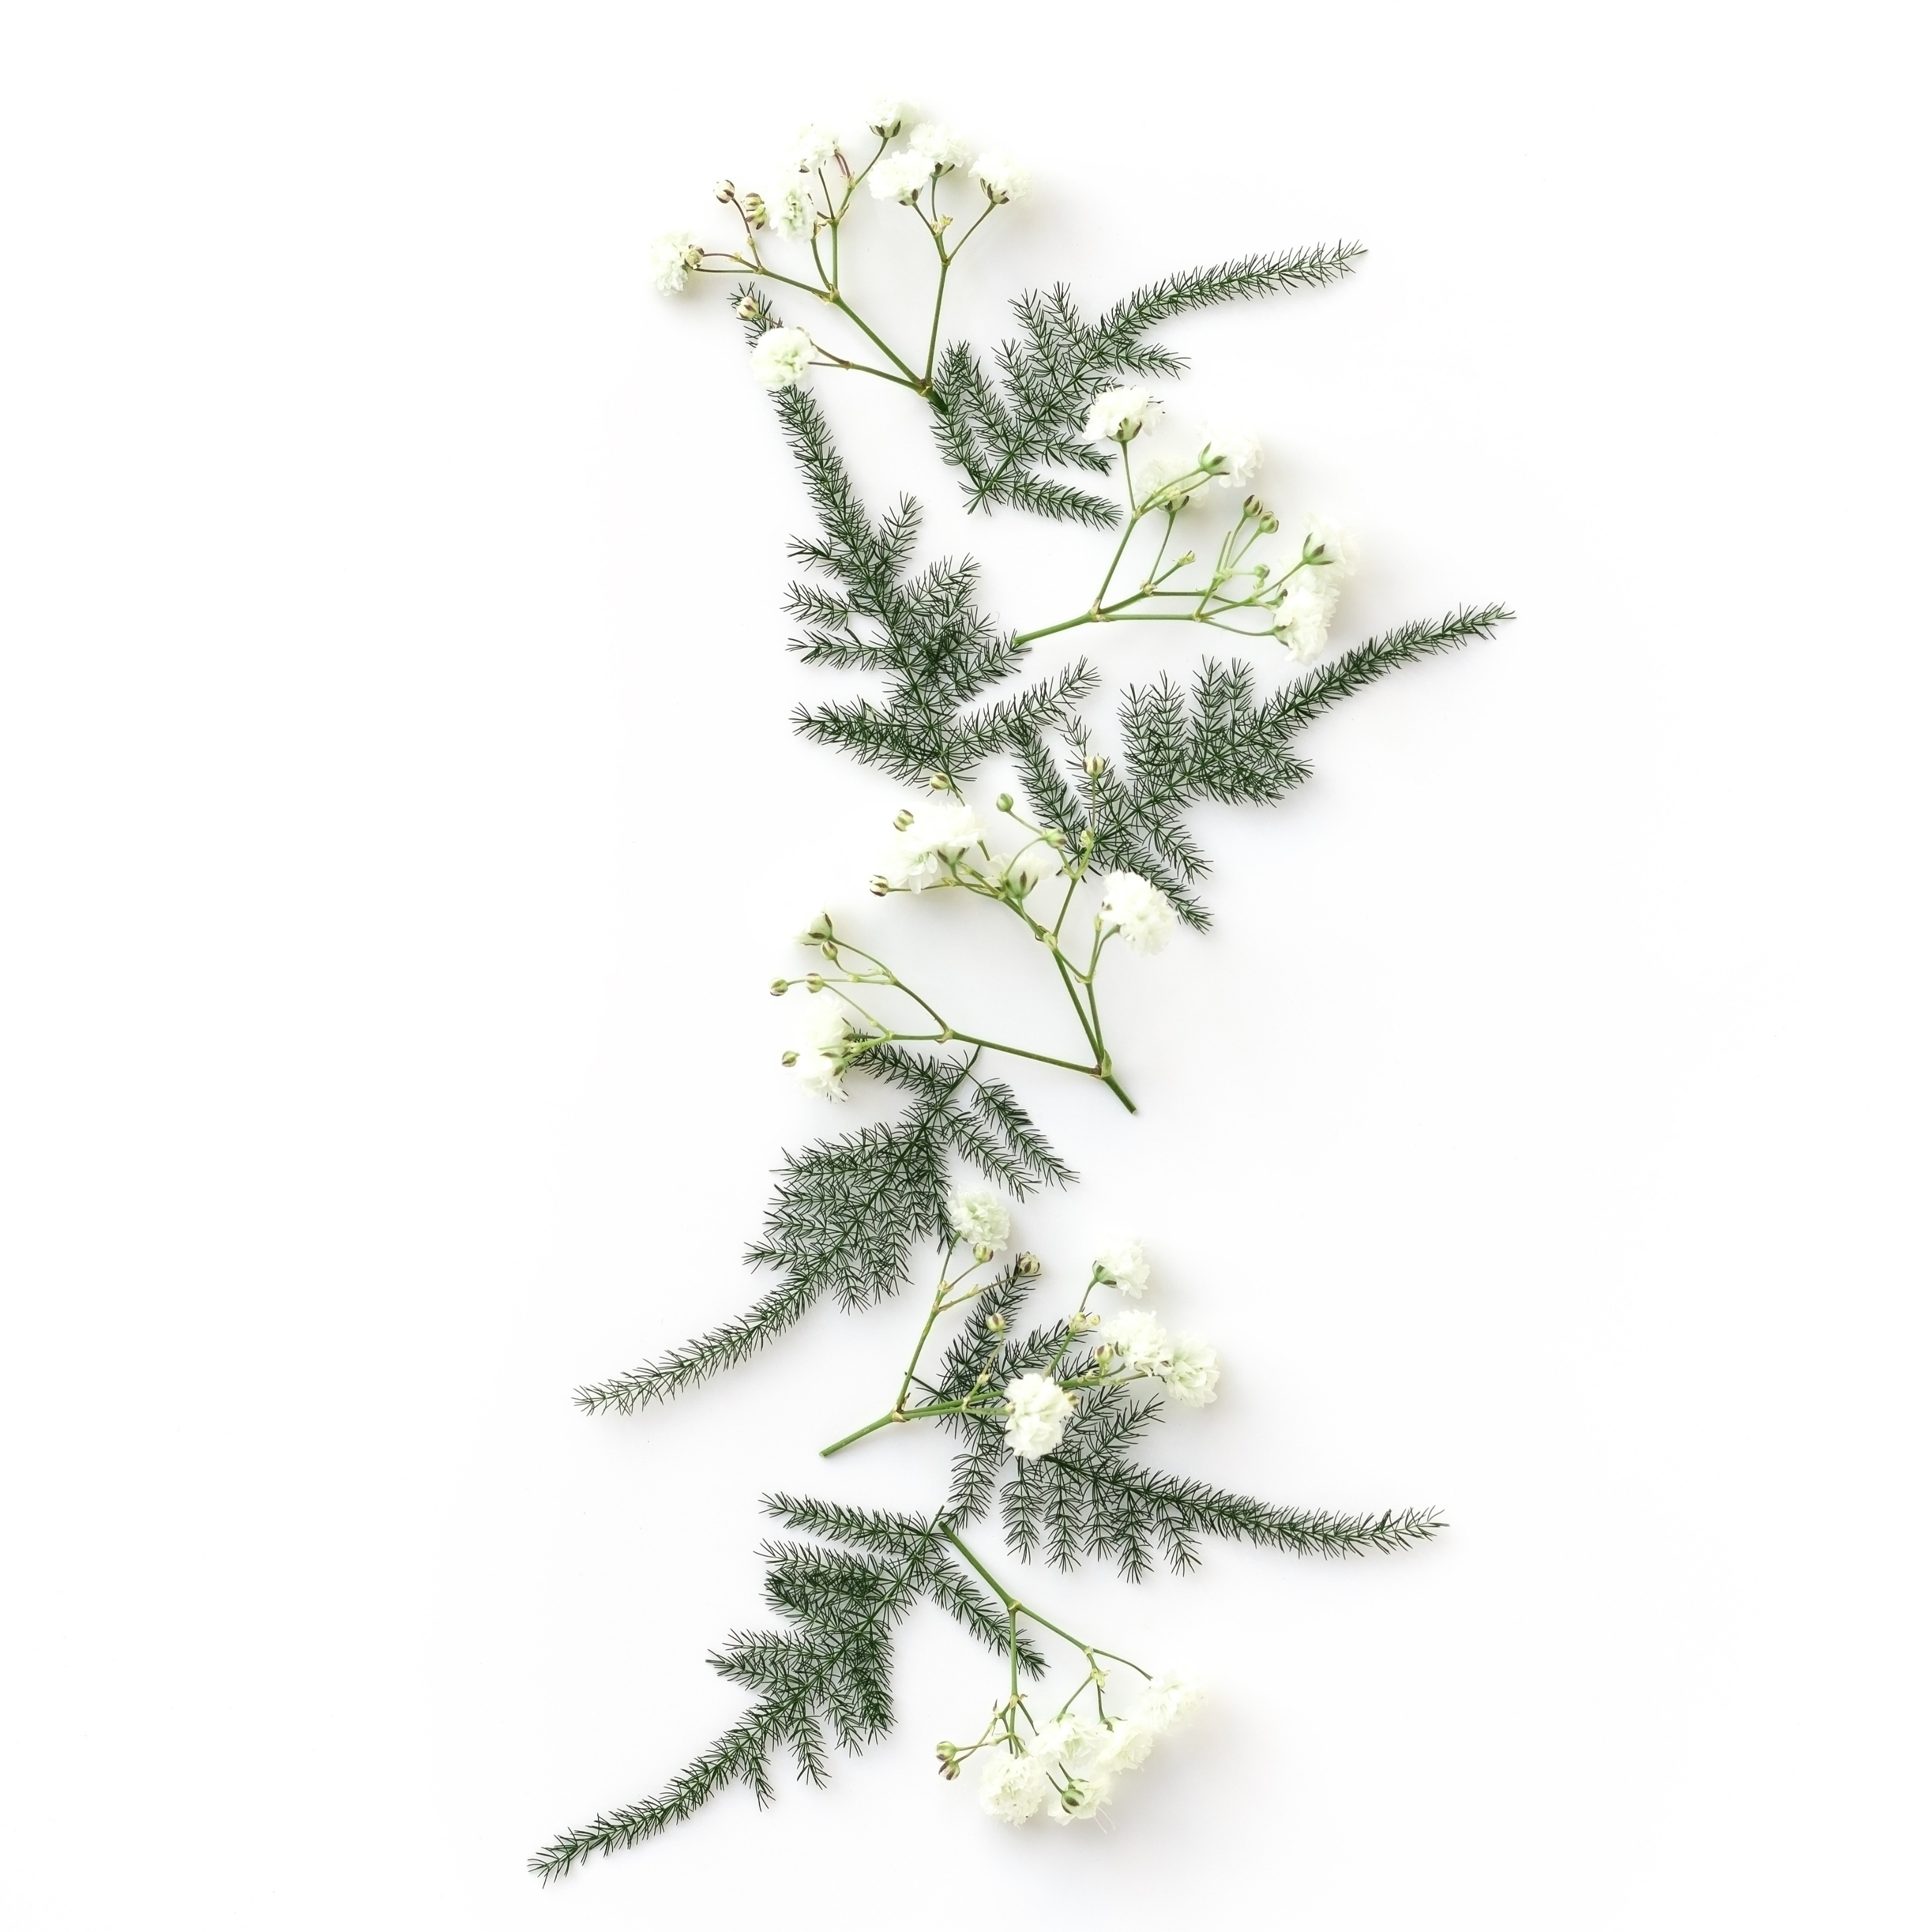 Minimalist Christmas Flowers Decoration Gift iPad Wallpaper